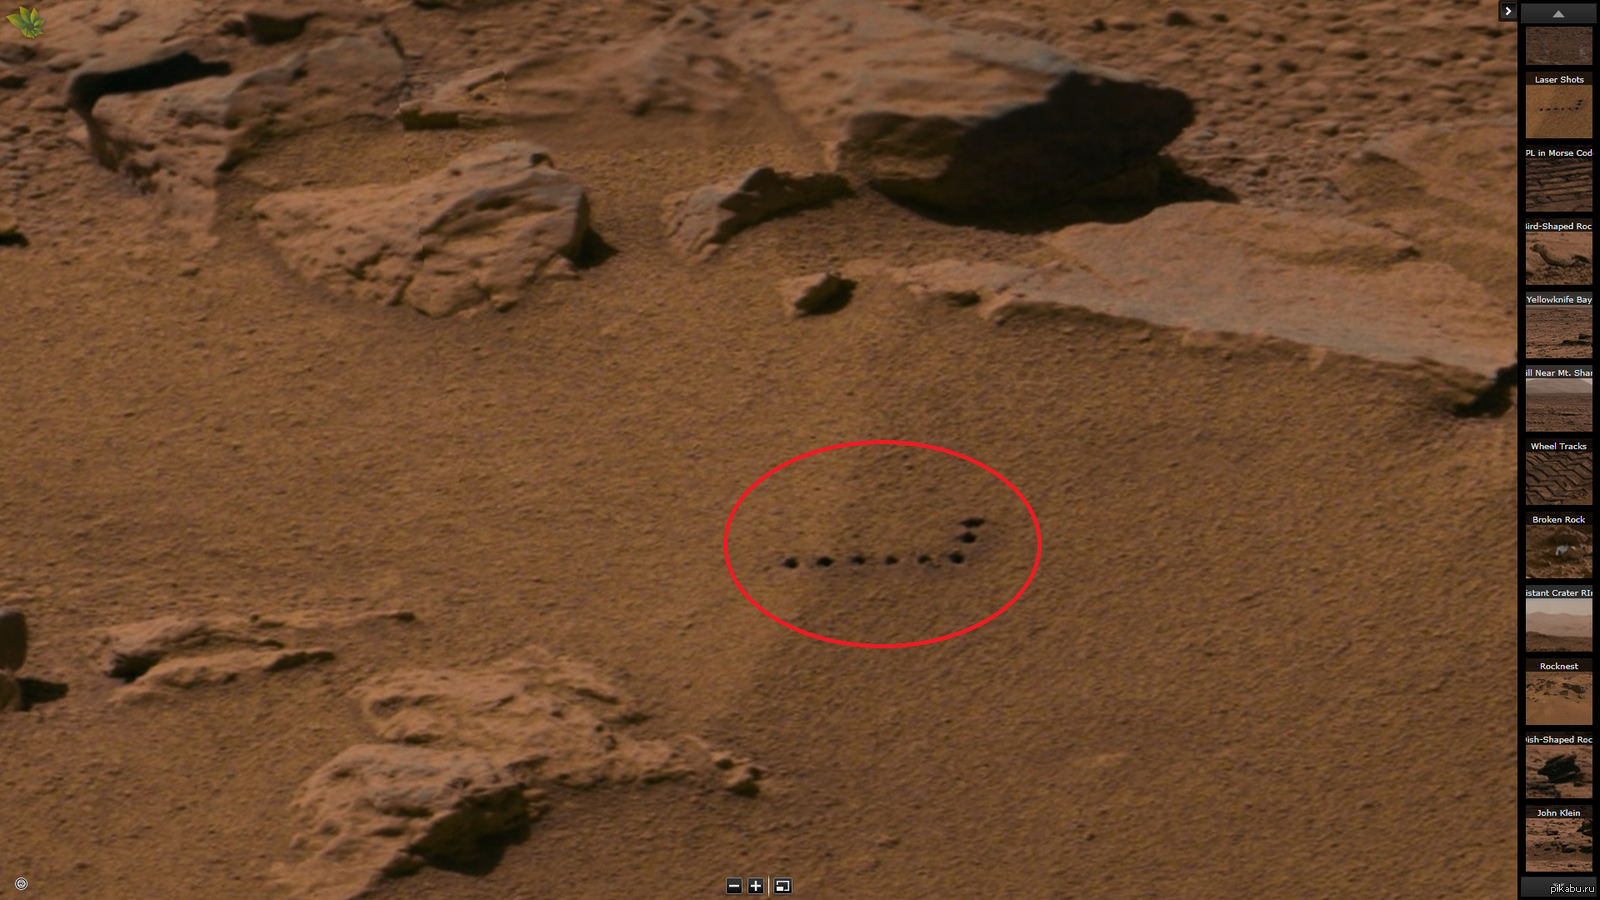 Гипотеза марса. Дорога на Марсе. Артефакты на Марсе. Необъяснимое на Марсе.